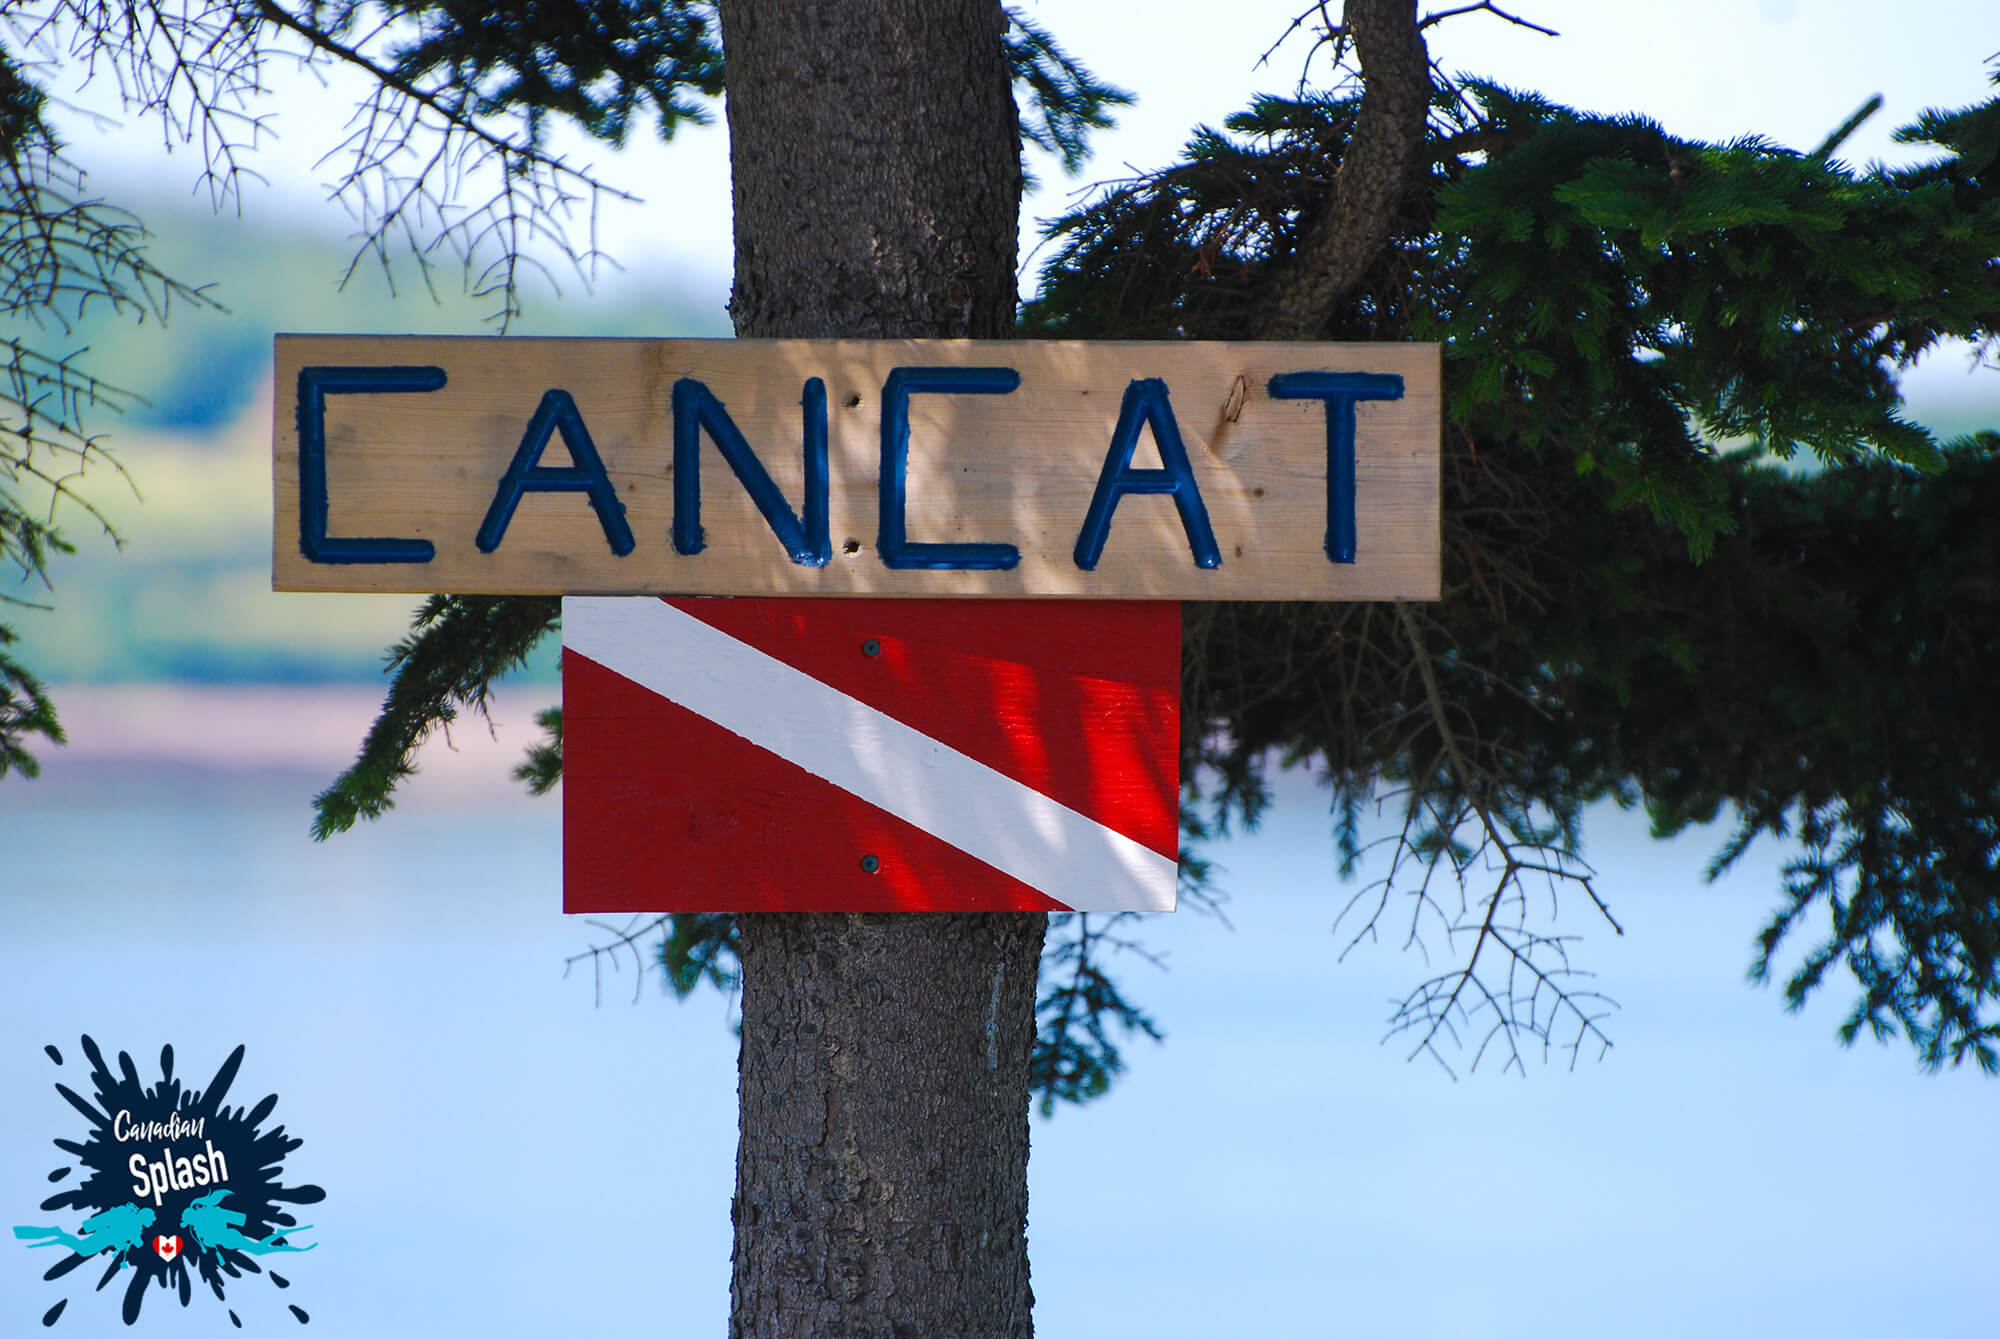 The Scuba Diving Sign For Cancat Beach On Deer Island, New Brunswick, Canadian Splash